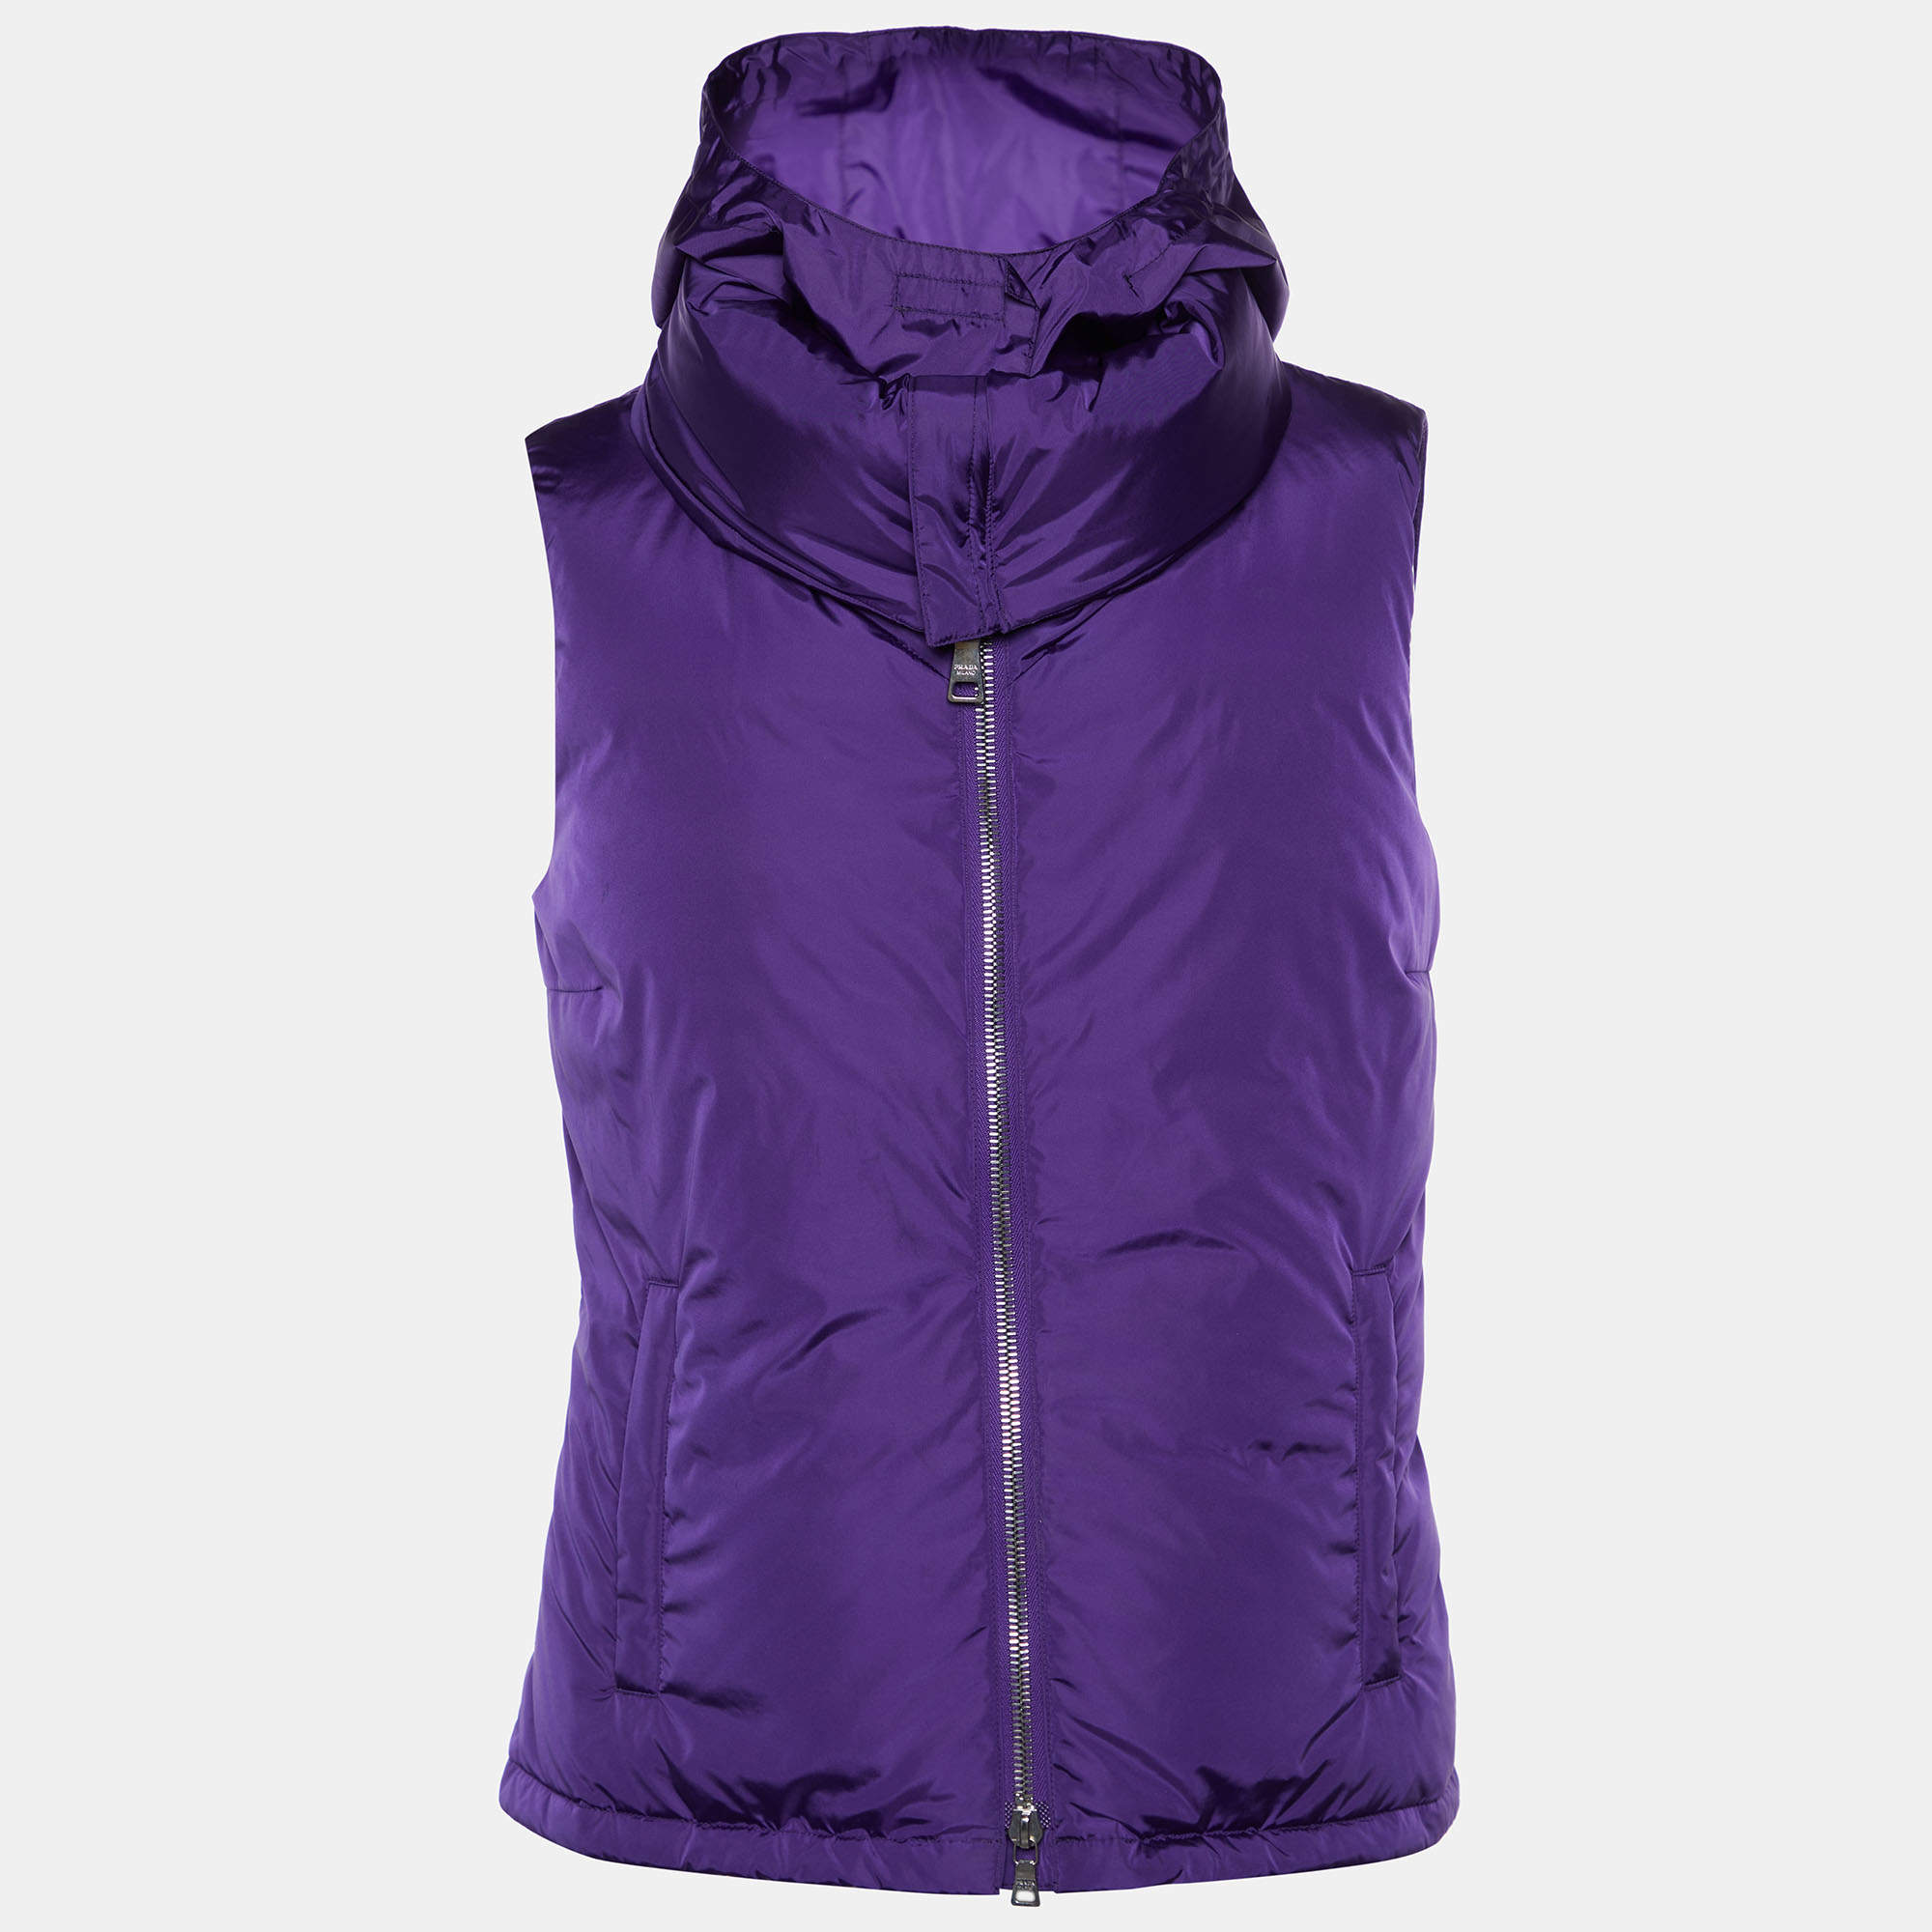 Prada Sport Purple Synthetic Hooded Sleeveless Gilet XS